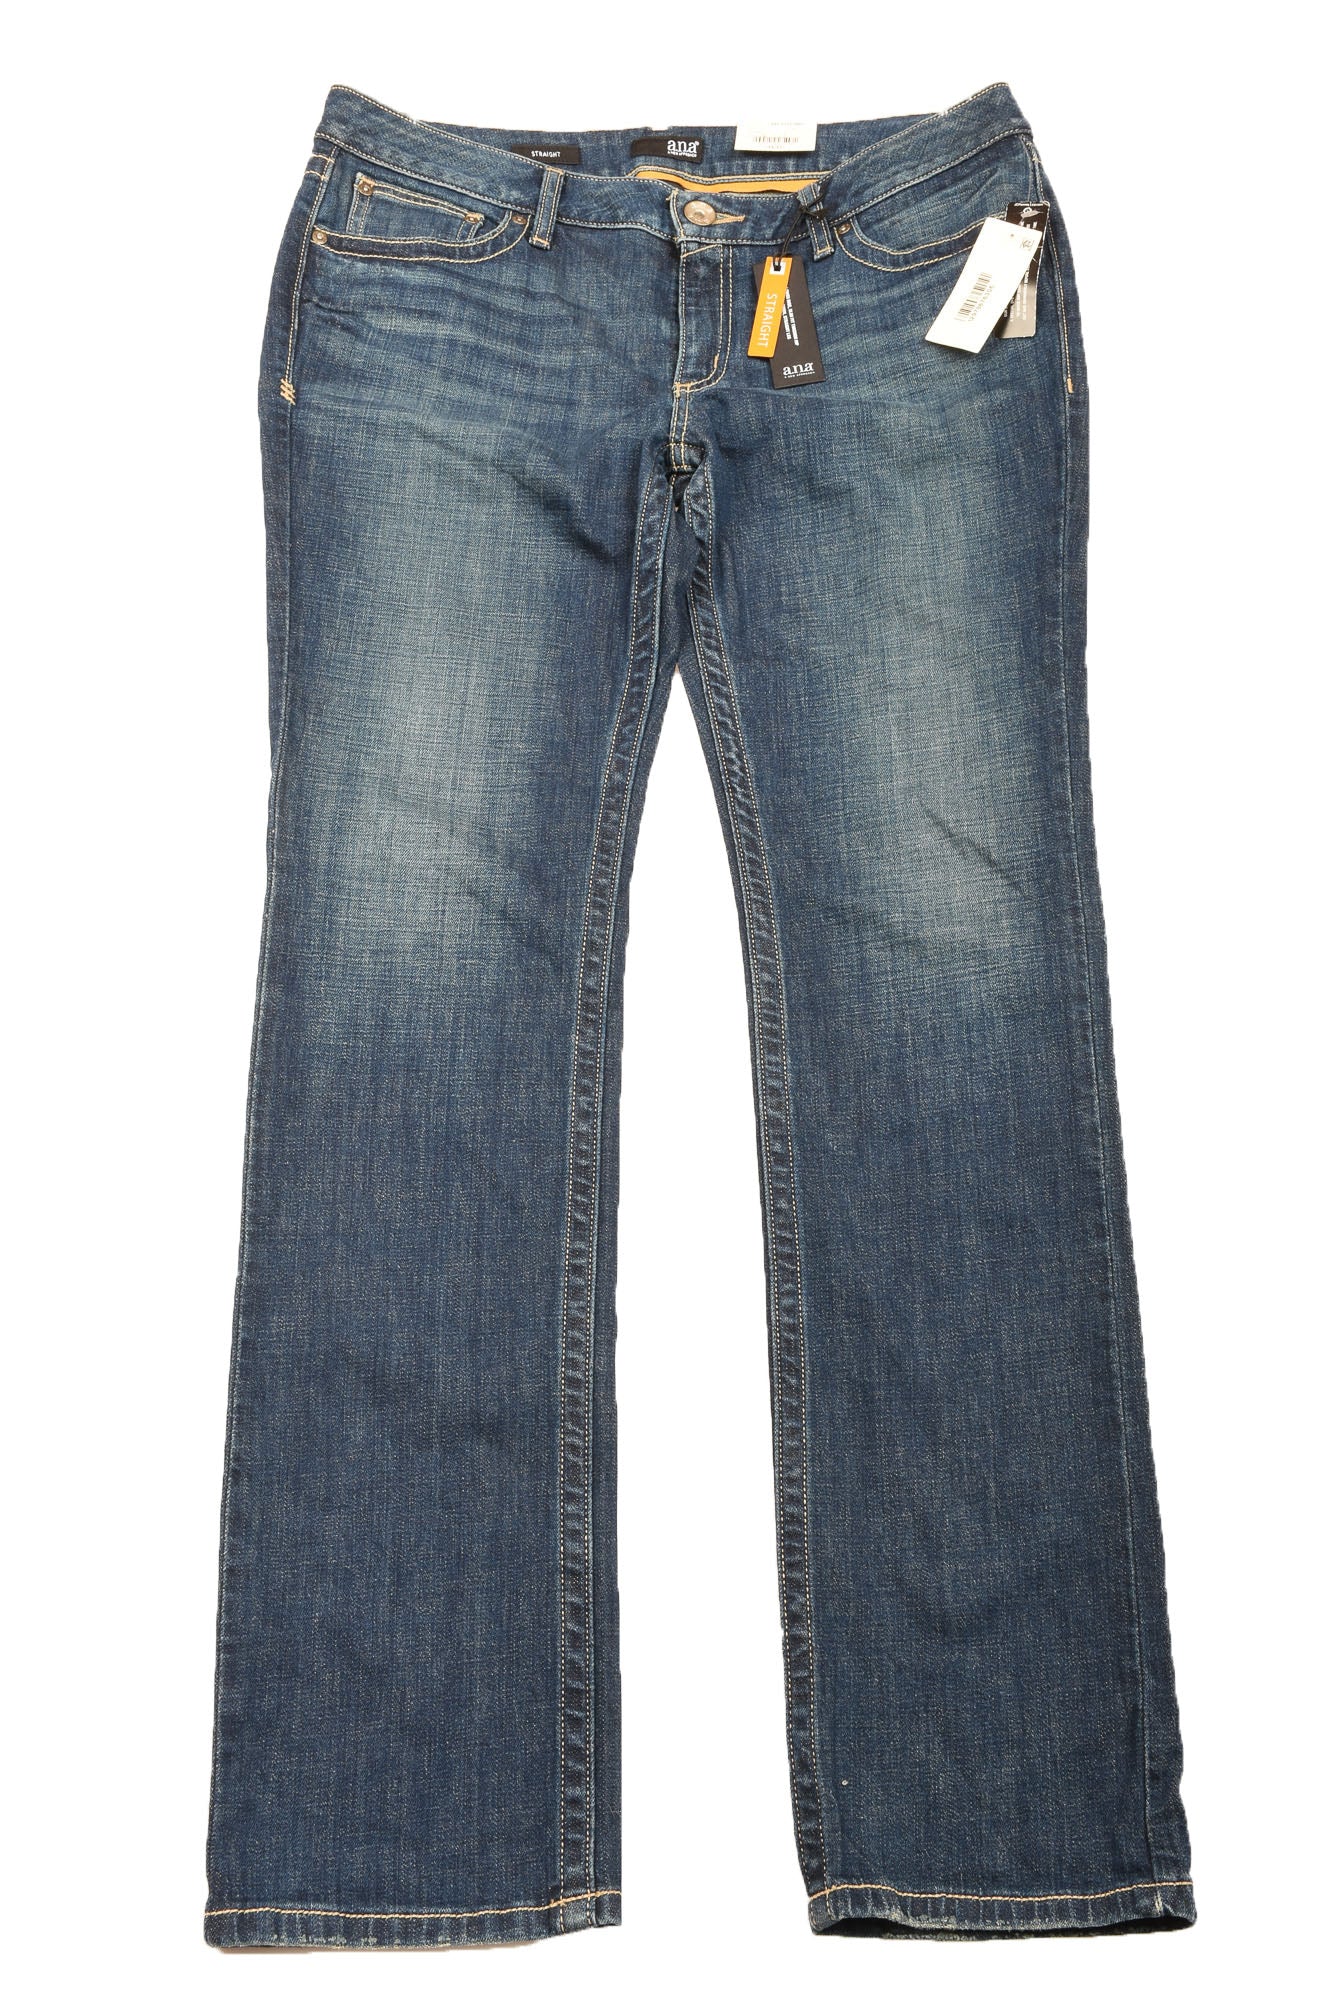 a.n.a A New Approach Bootcut Jeans Women's Size 8 Blue Denim pants